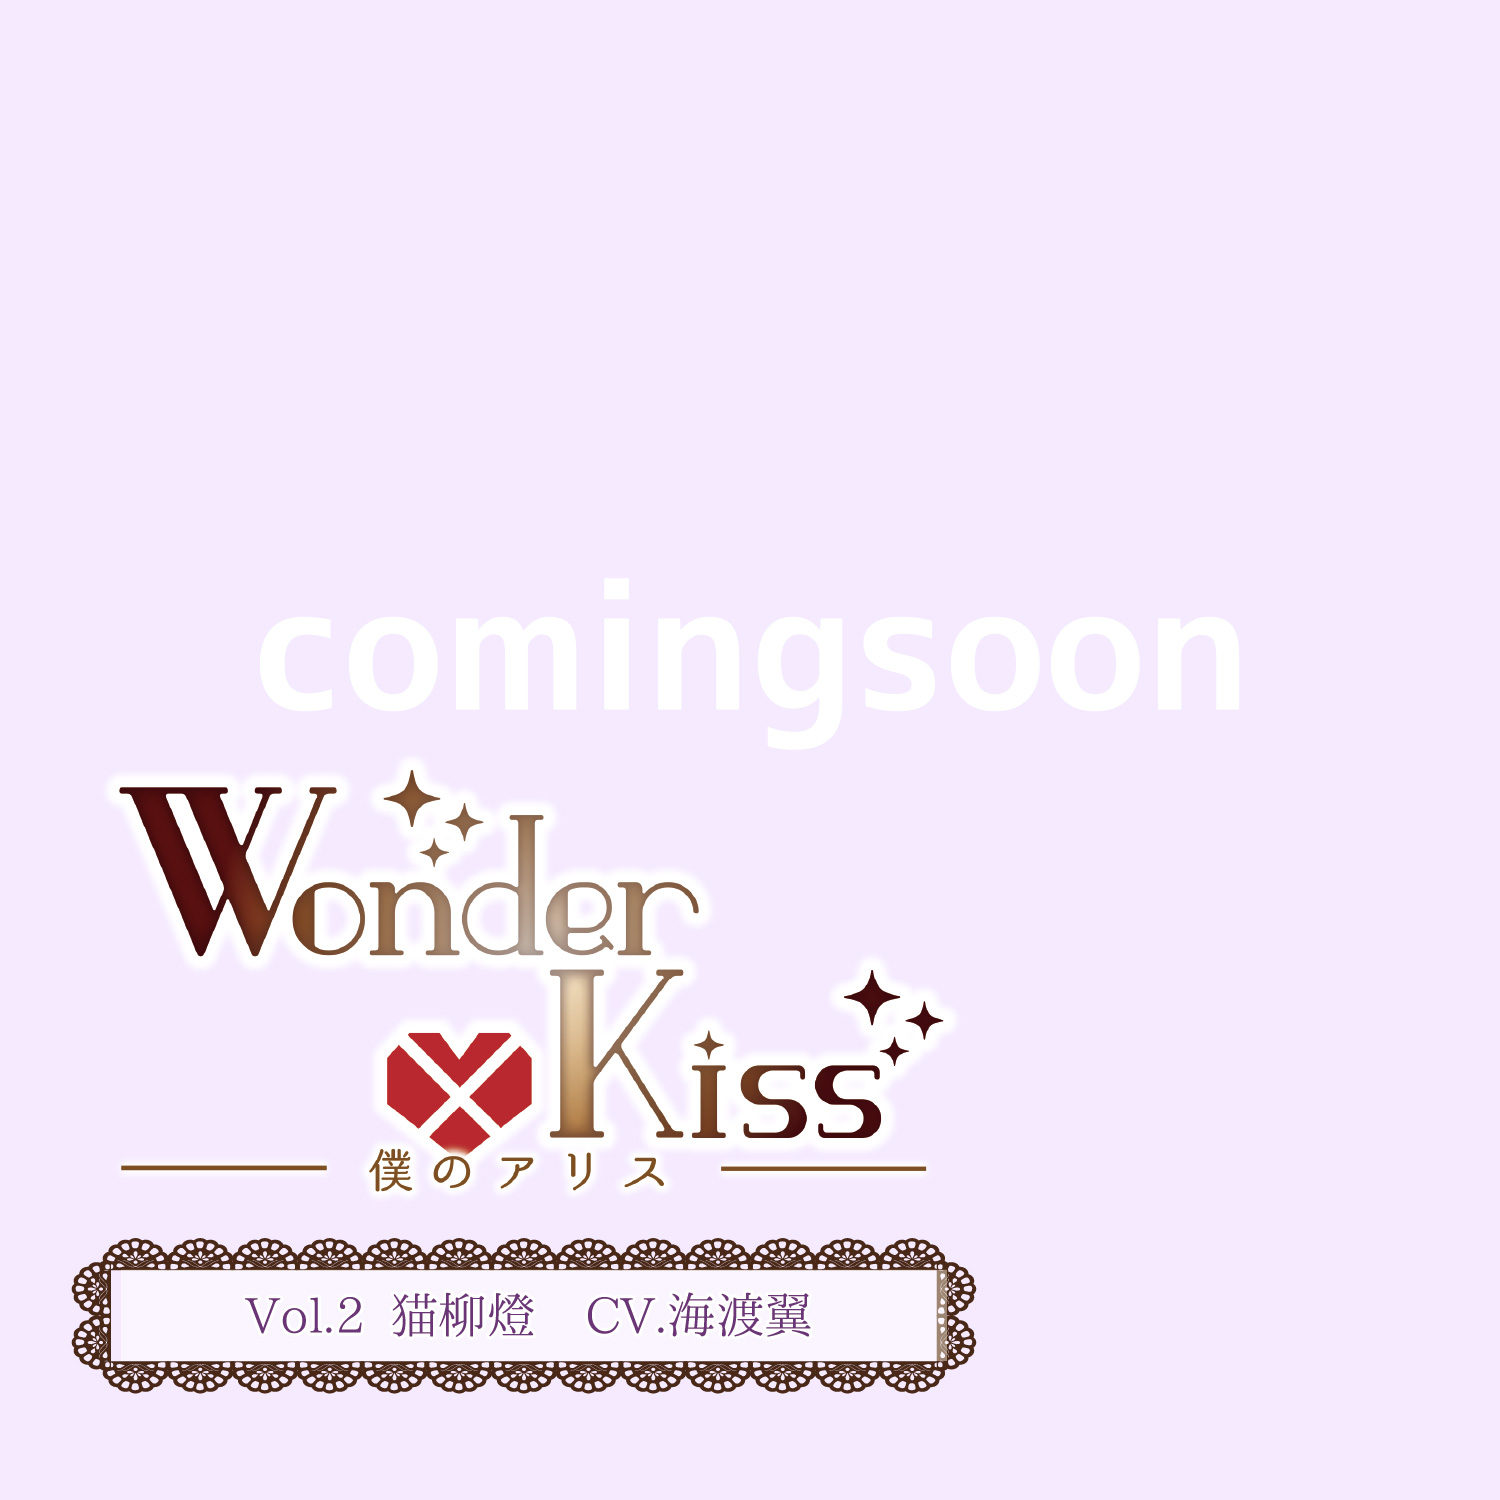 「Wonder×Kiss Vol.2 猫柳燈 (CV.海渡翼)」